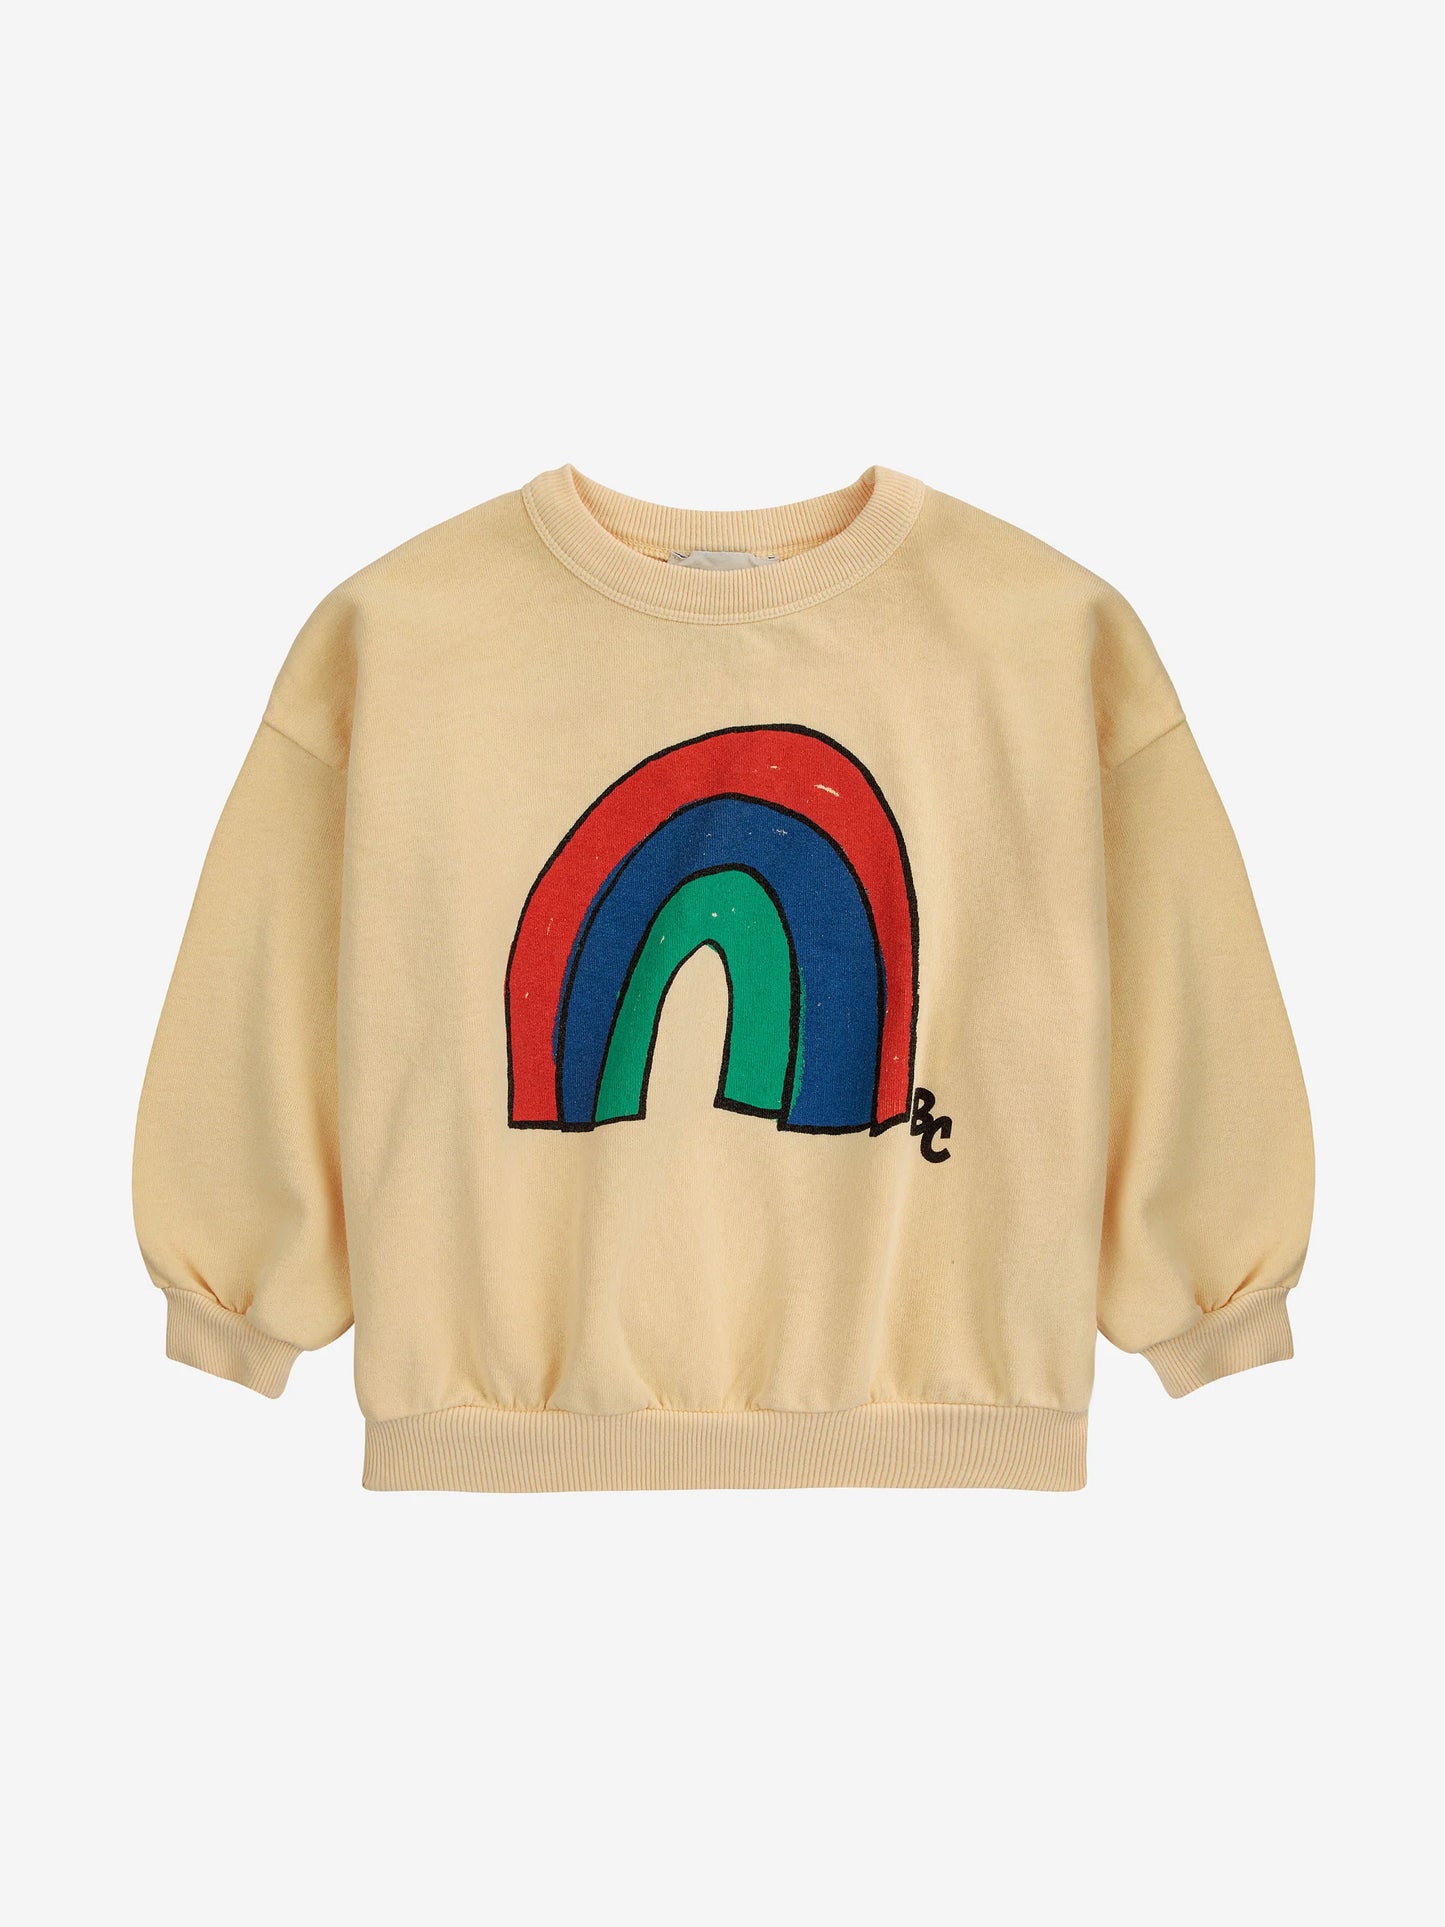 Bobo Choses Rainbow Sweatshirt